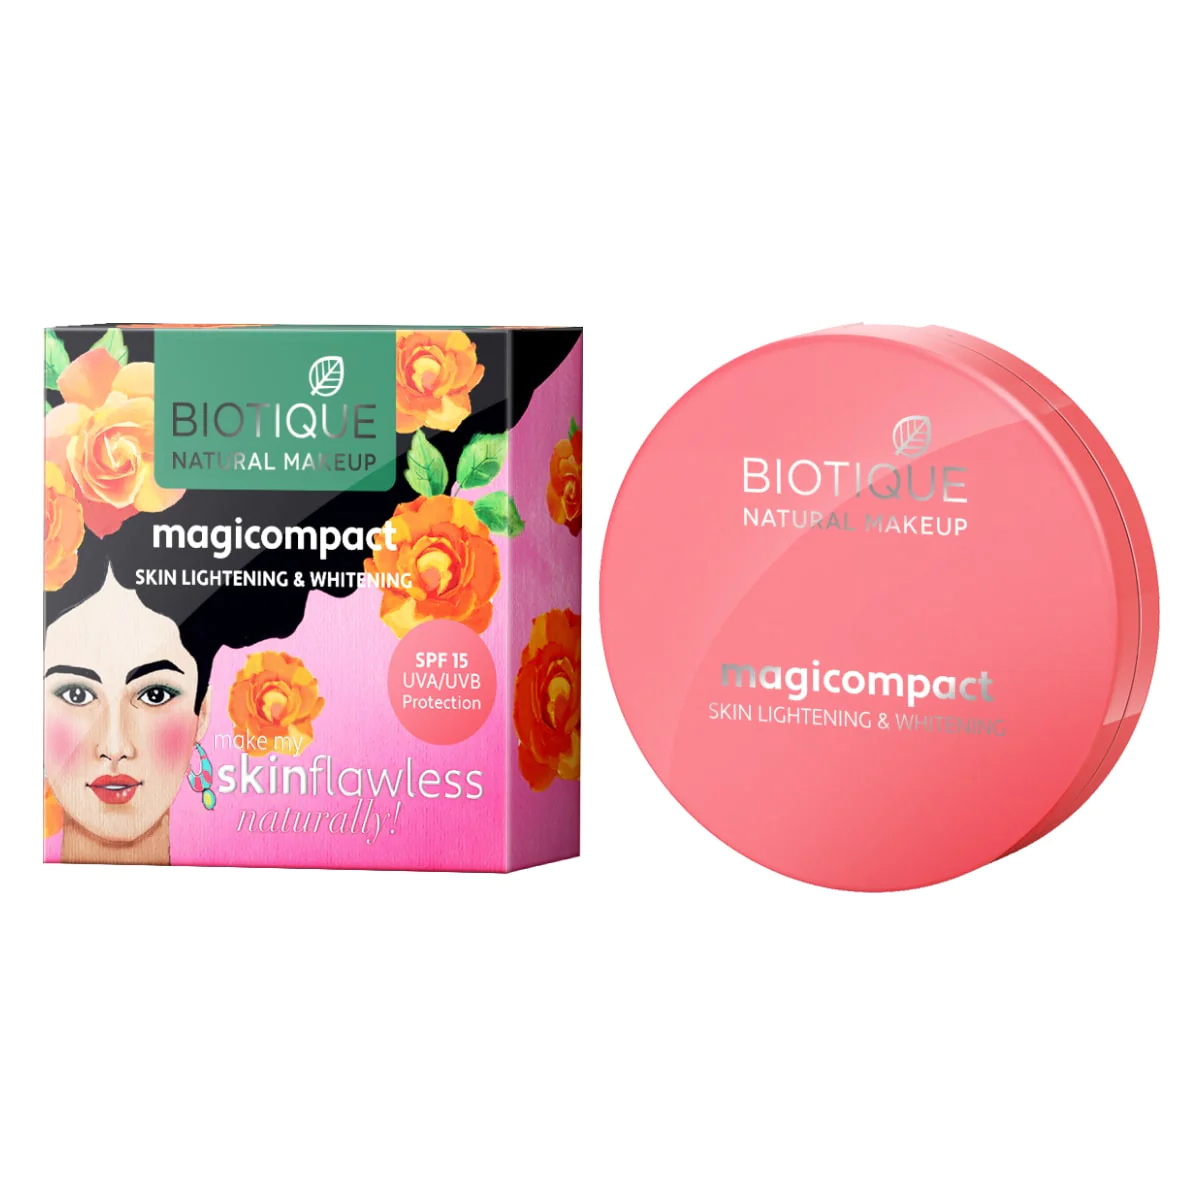 Biotique Natural Makeup Magicompact, Clay, 8g